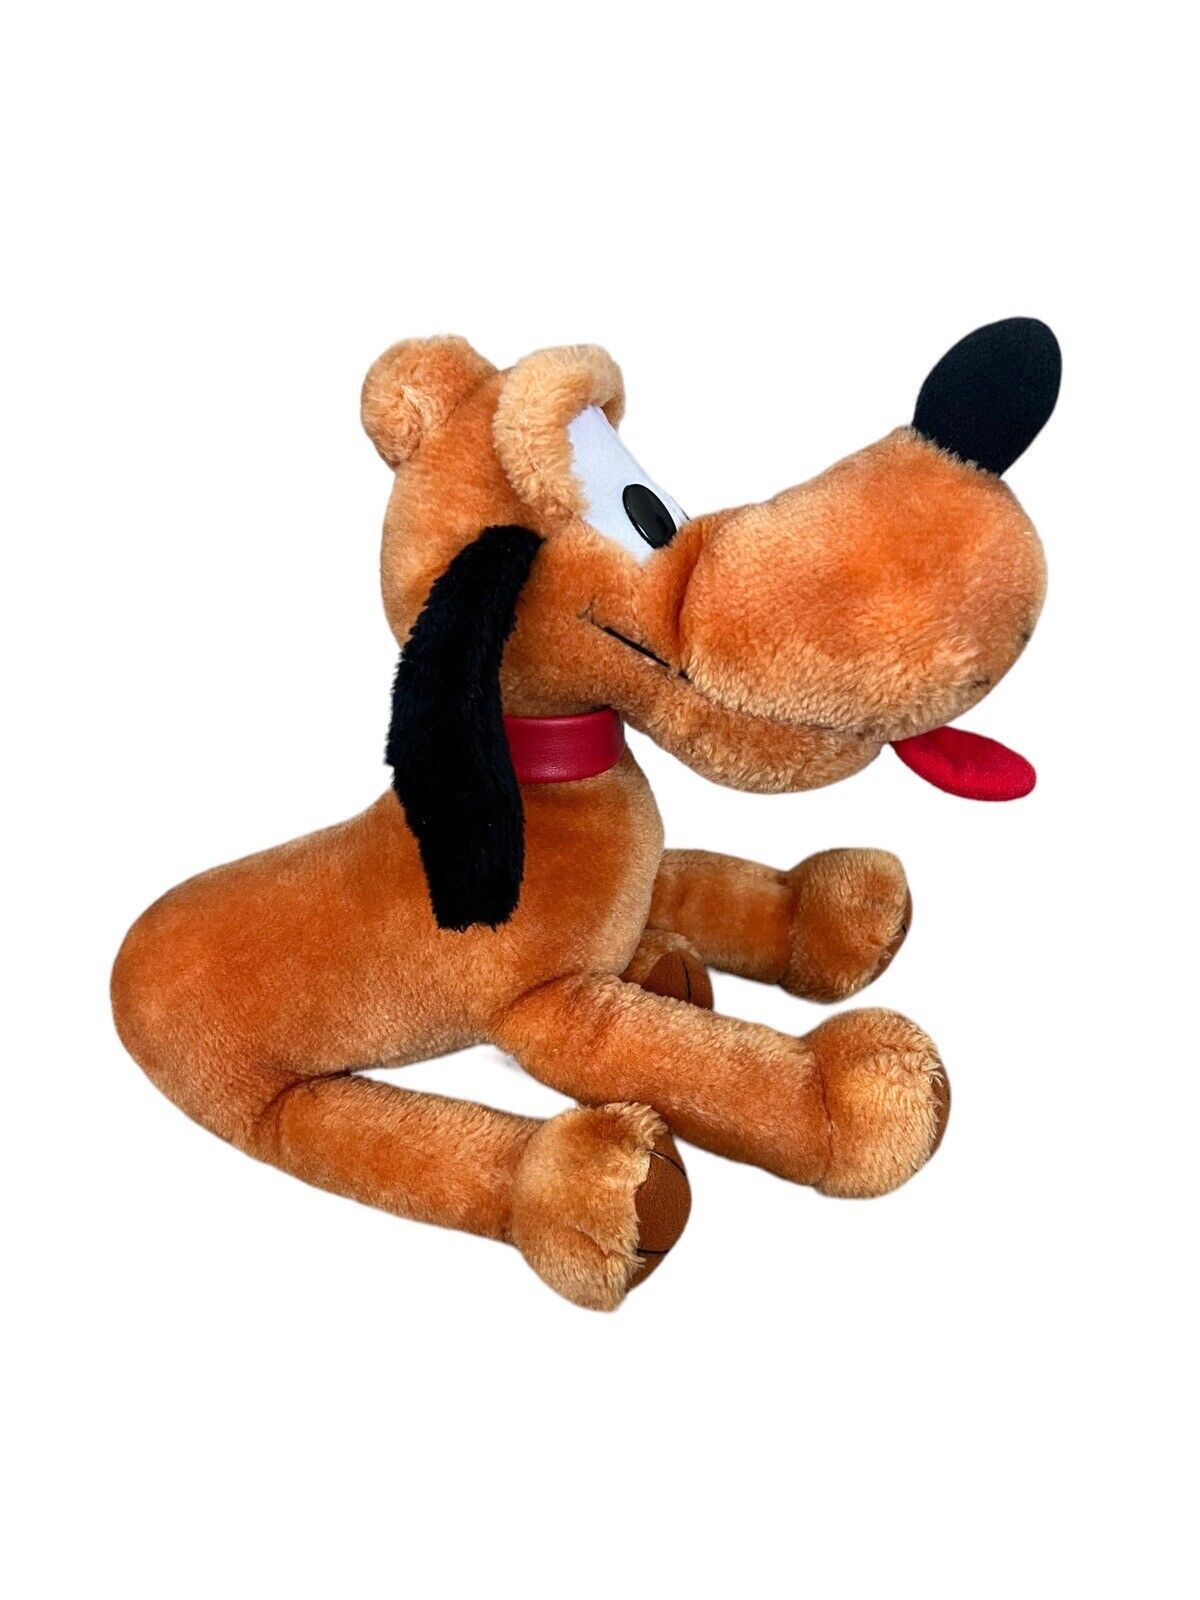 Vintage Disney Pluto Plush Stuffed Animal 1984 Applause 17 Inch Dog Pet